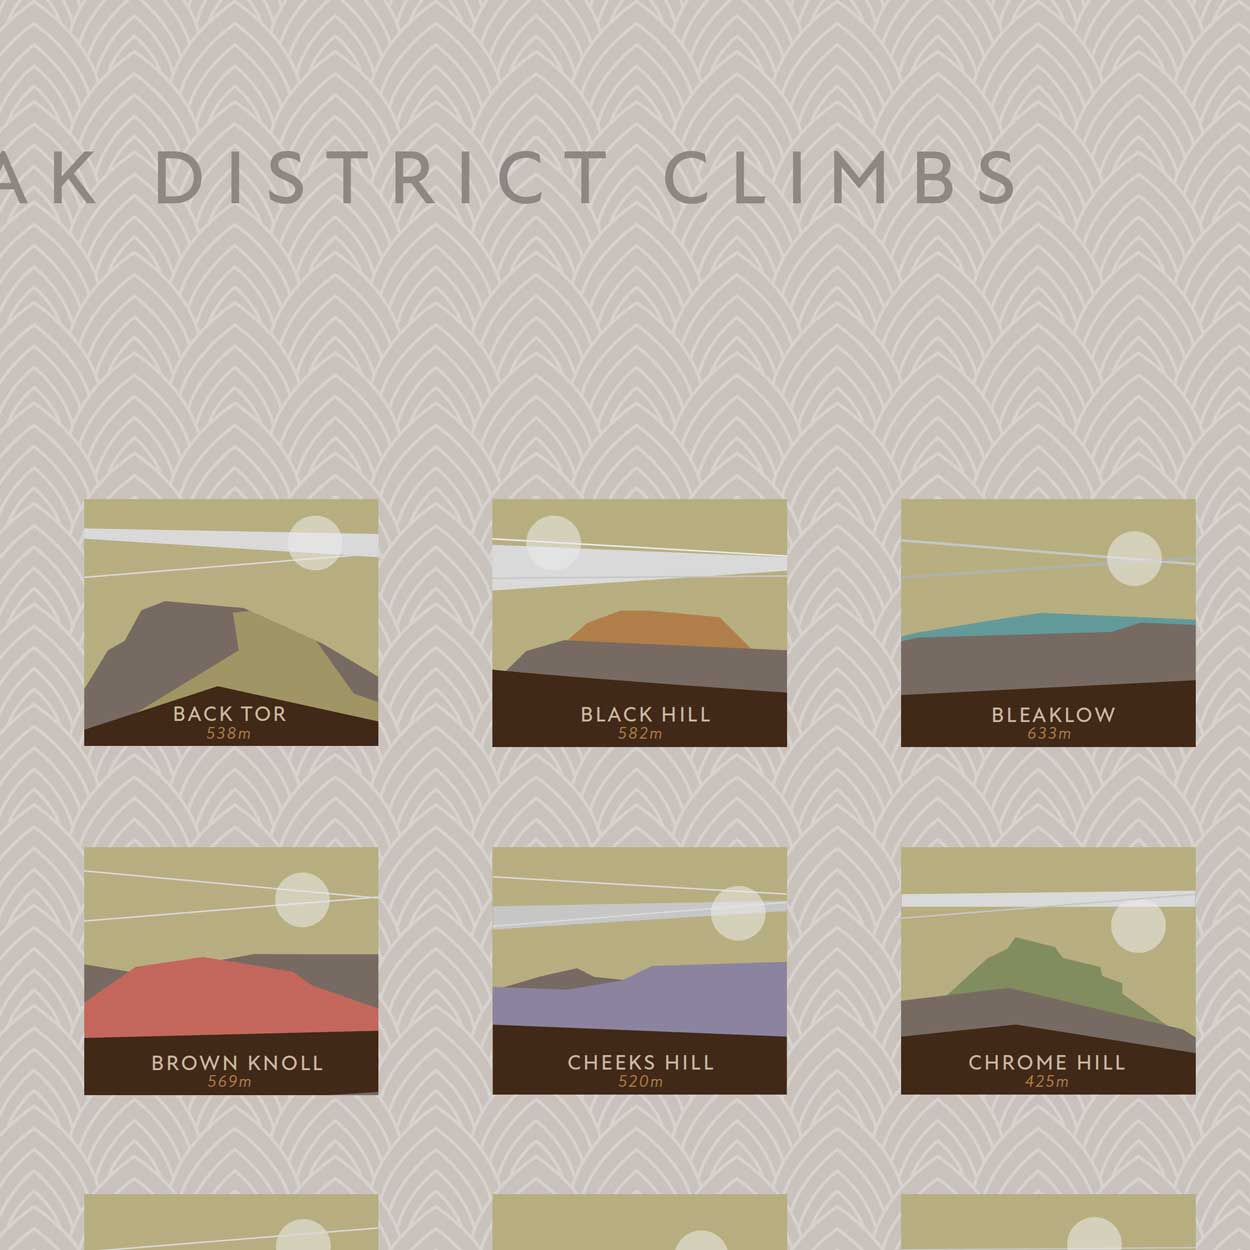 famous peak district hills poster